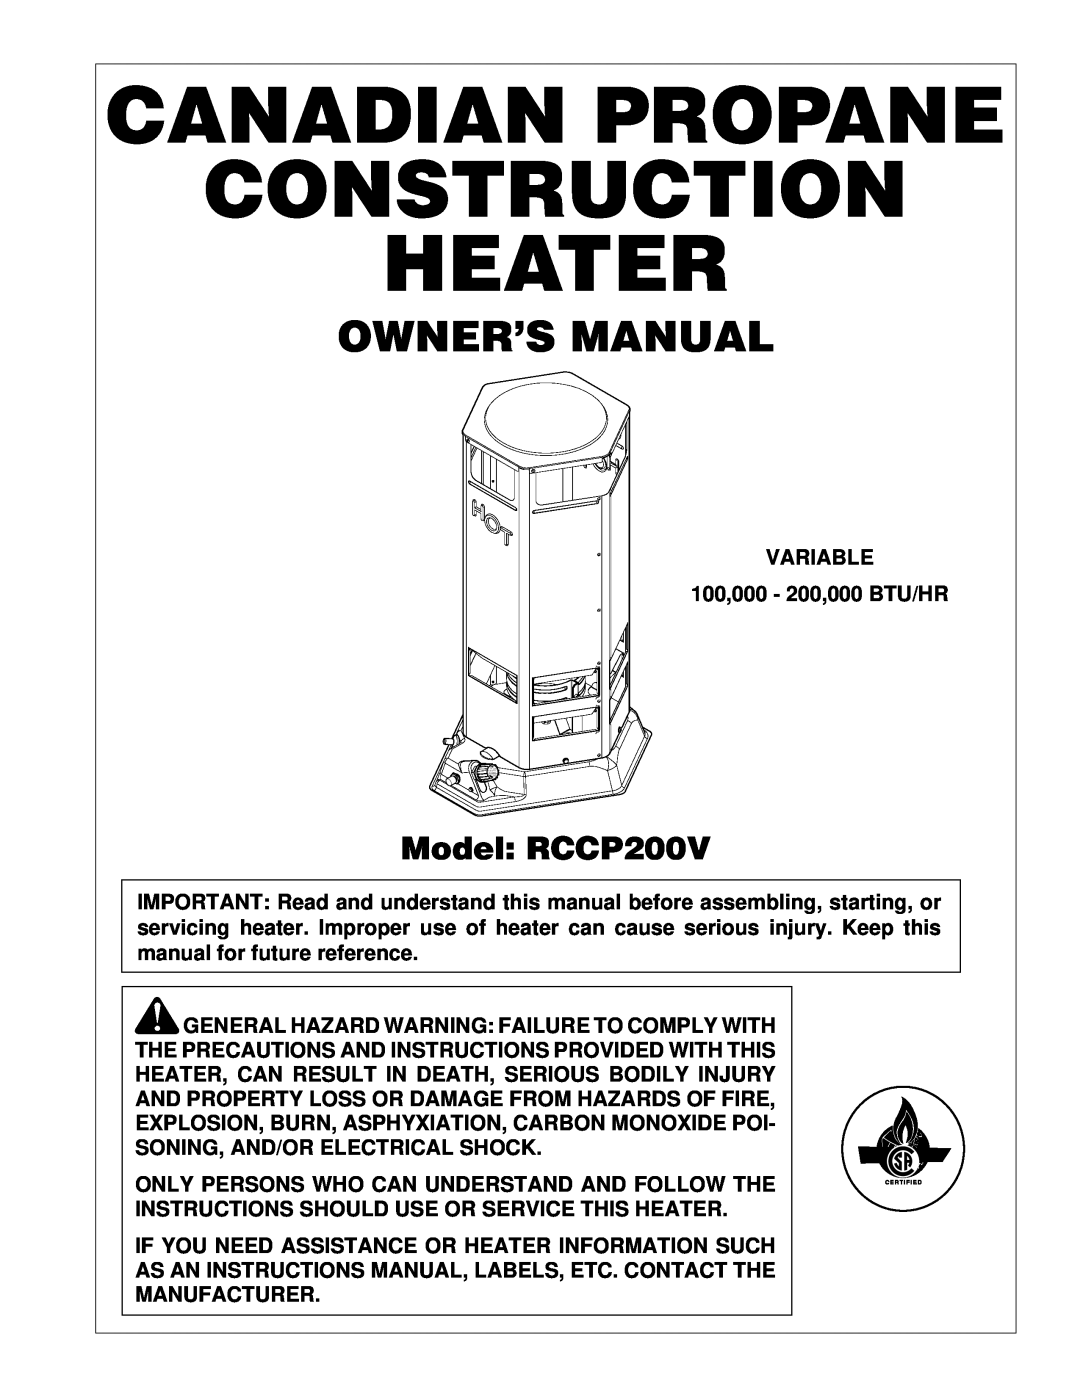 Desa owner manual Model RCCP200V, Canadian Propane Construction Heater 